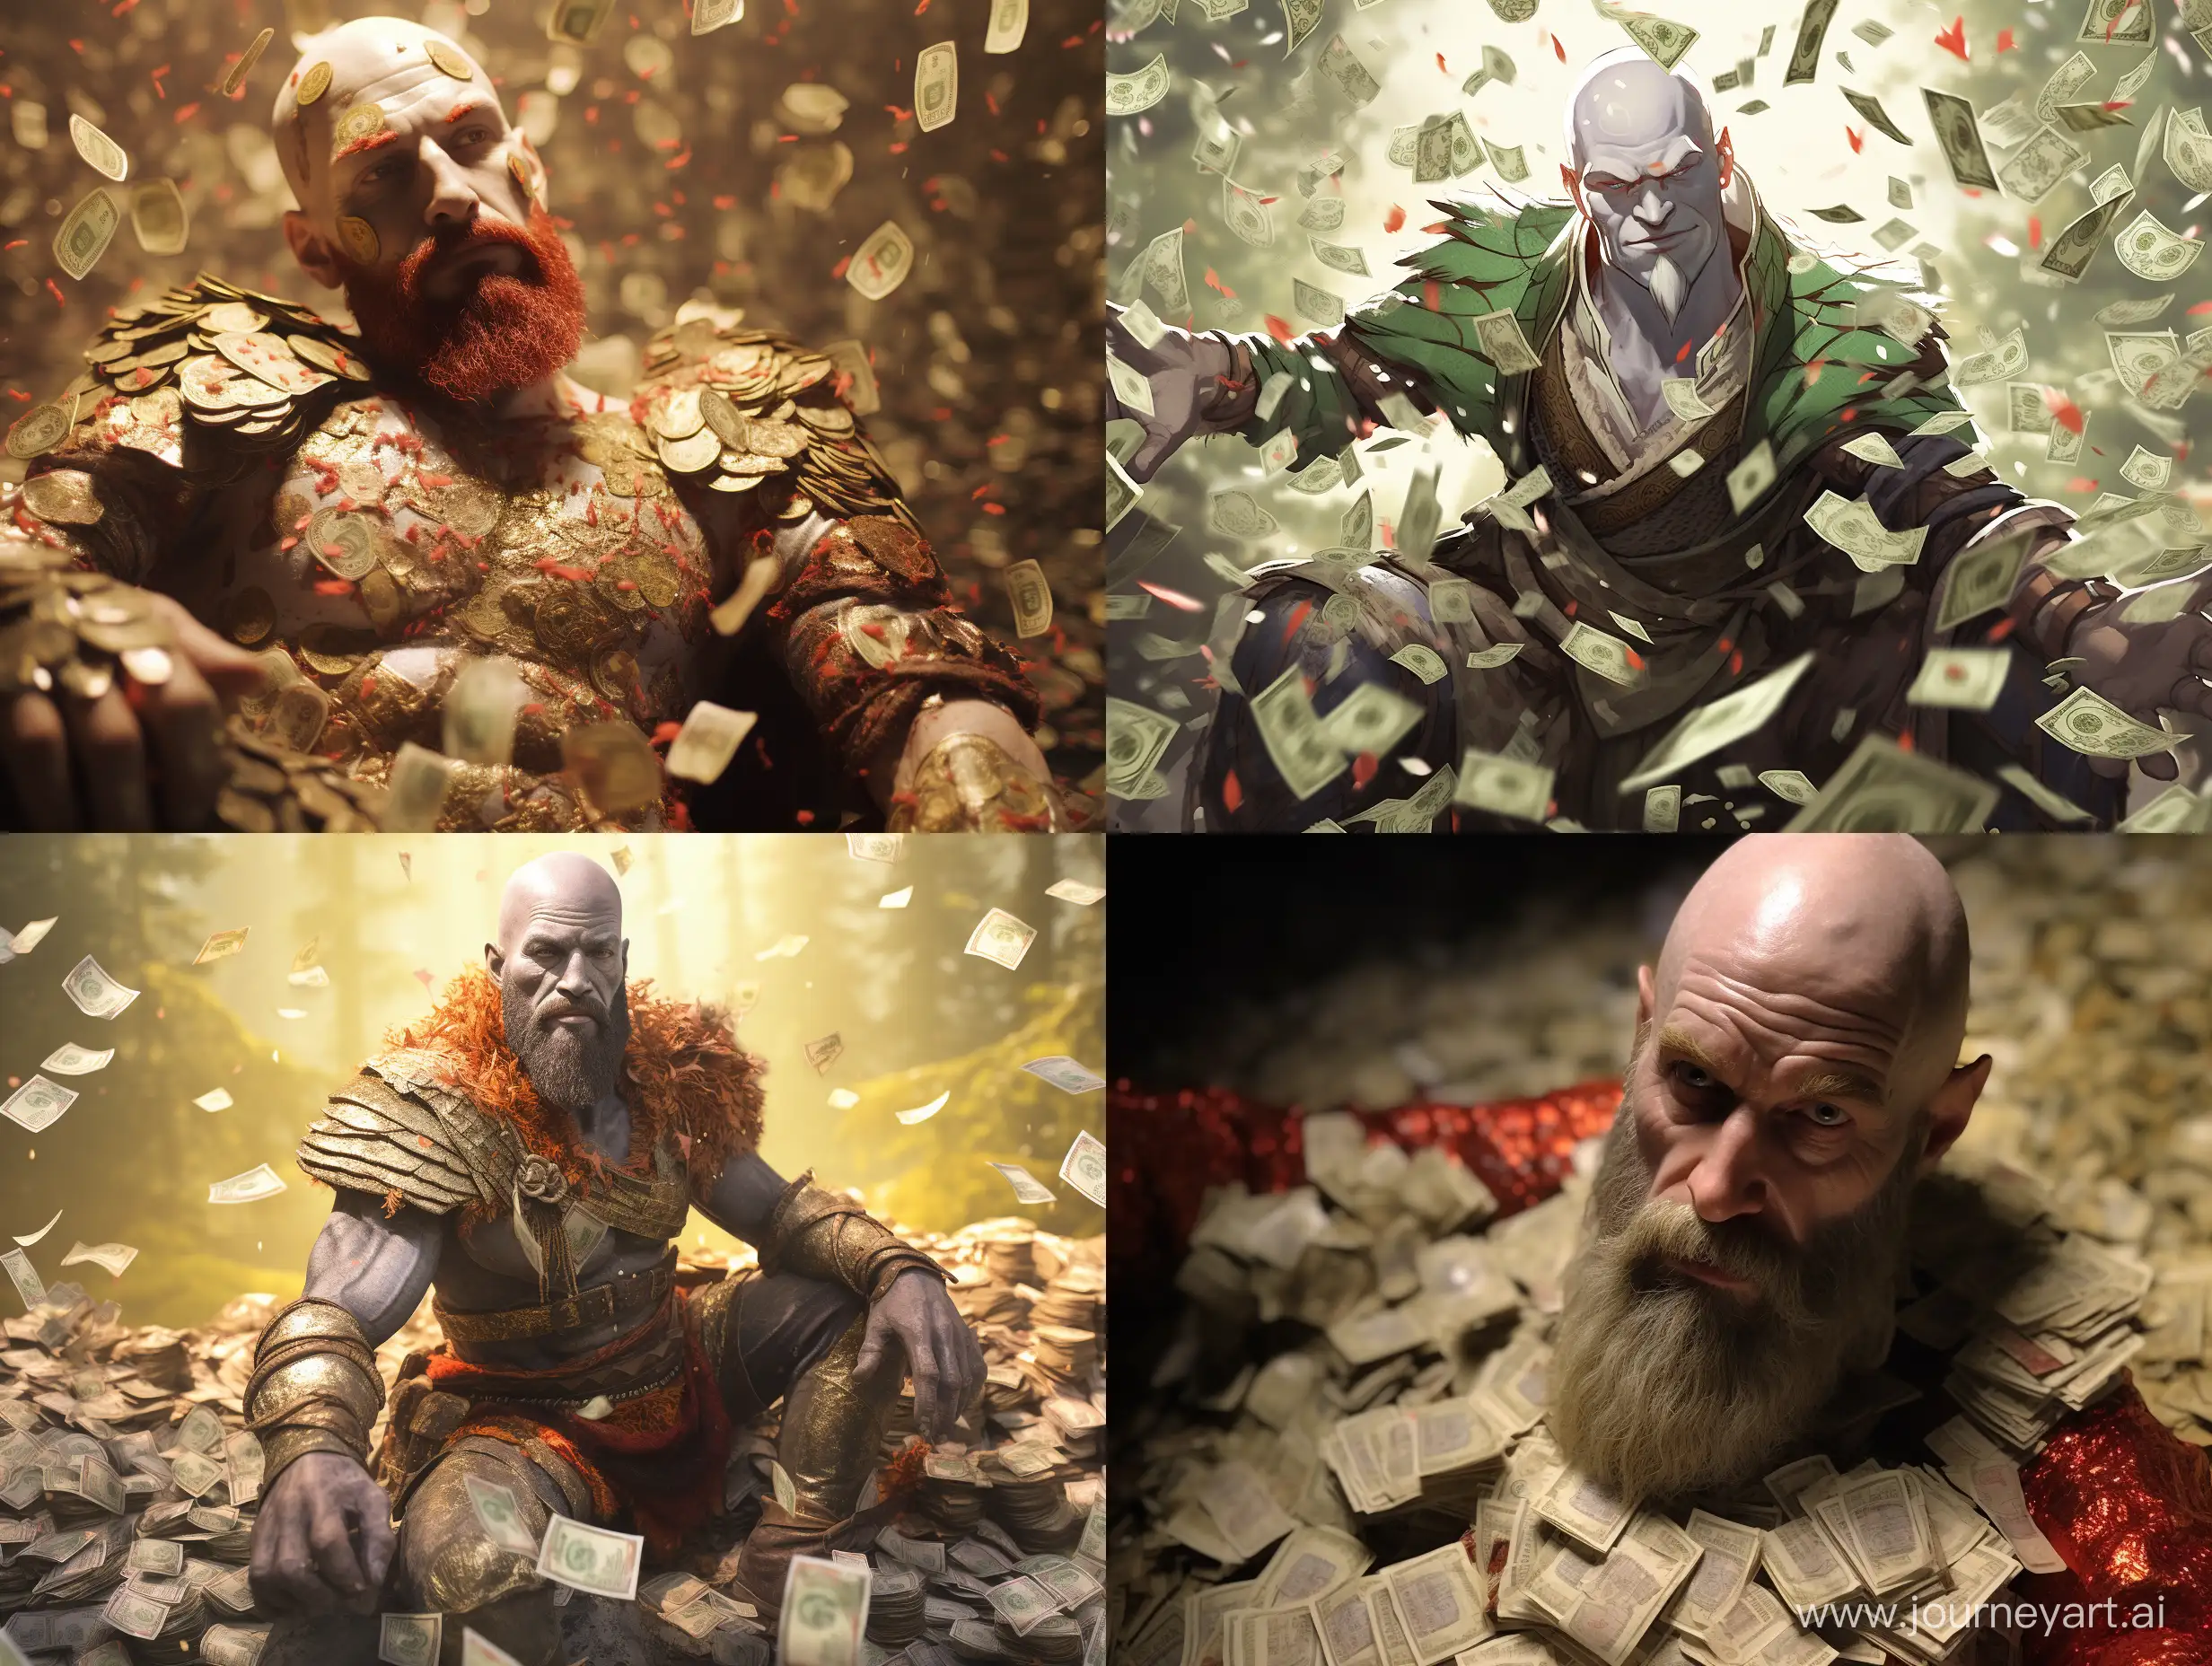 Kratos-the-God-of-War-Asserts-Dominance-Over-Wealth-in-Unique-Artwork